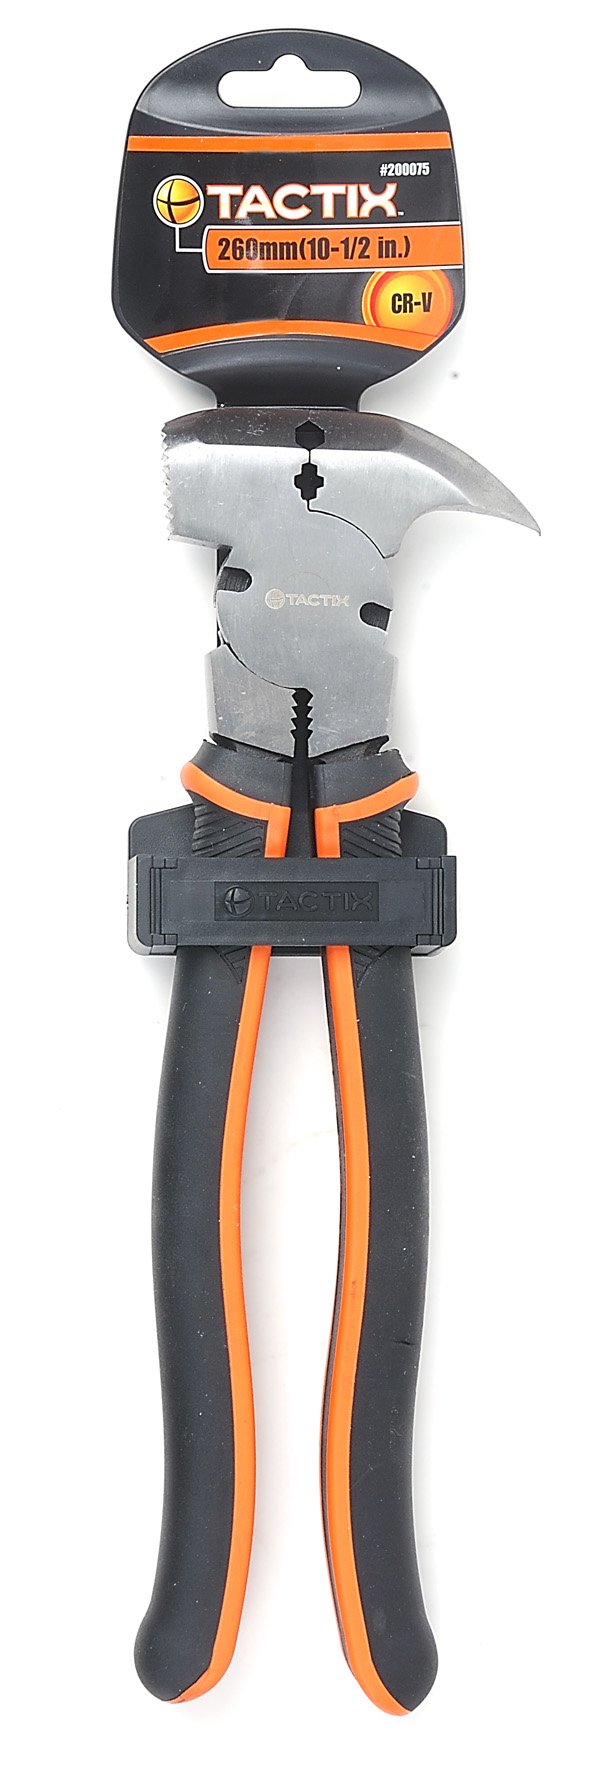 Tactix 200075 270mm Fence Pliers, Black/Orange